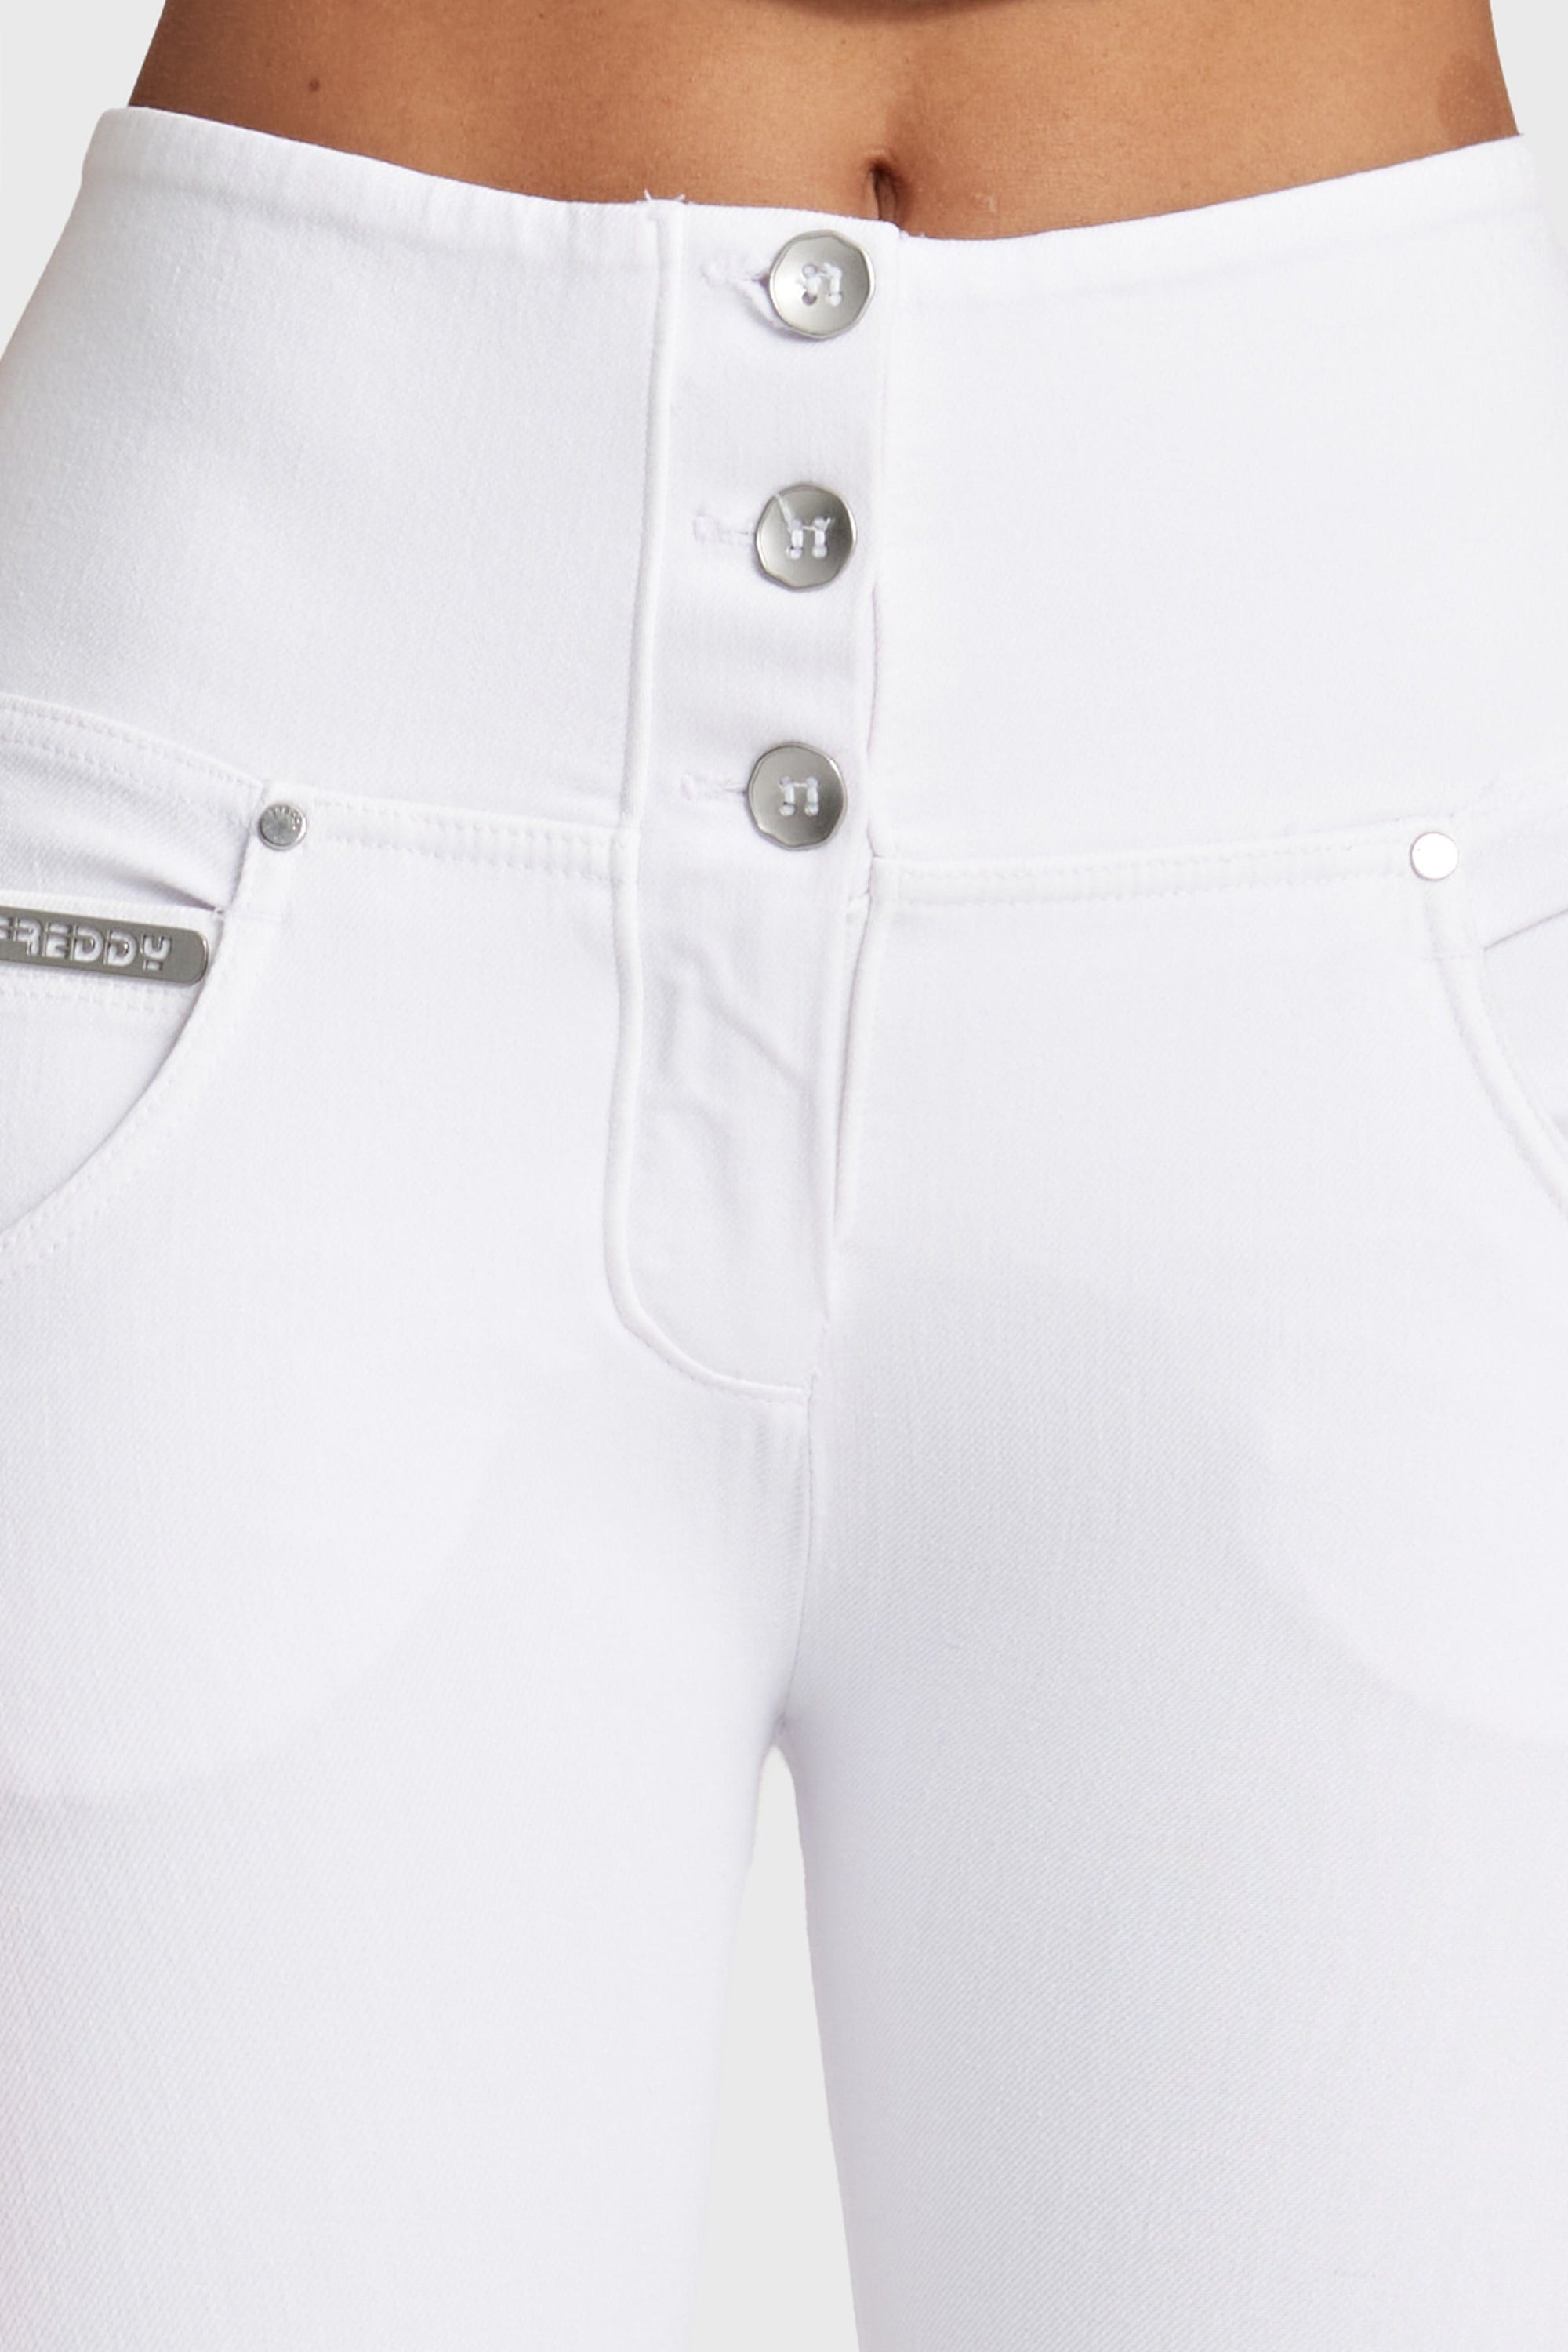 WR.UP® Snug Distressed Jeans - High Waisted - Petite Length - White 8